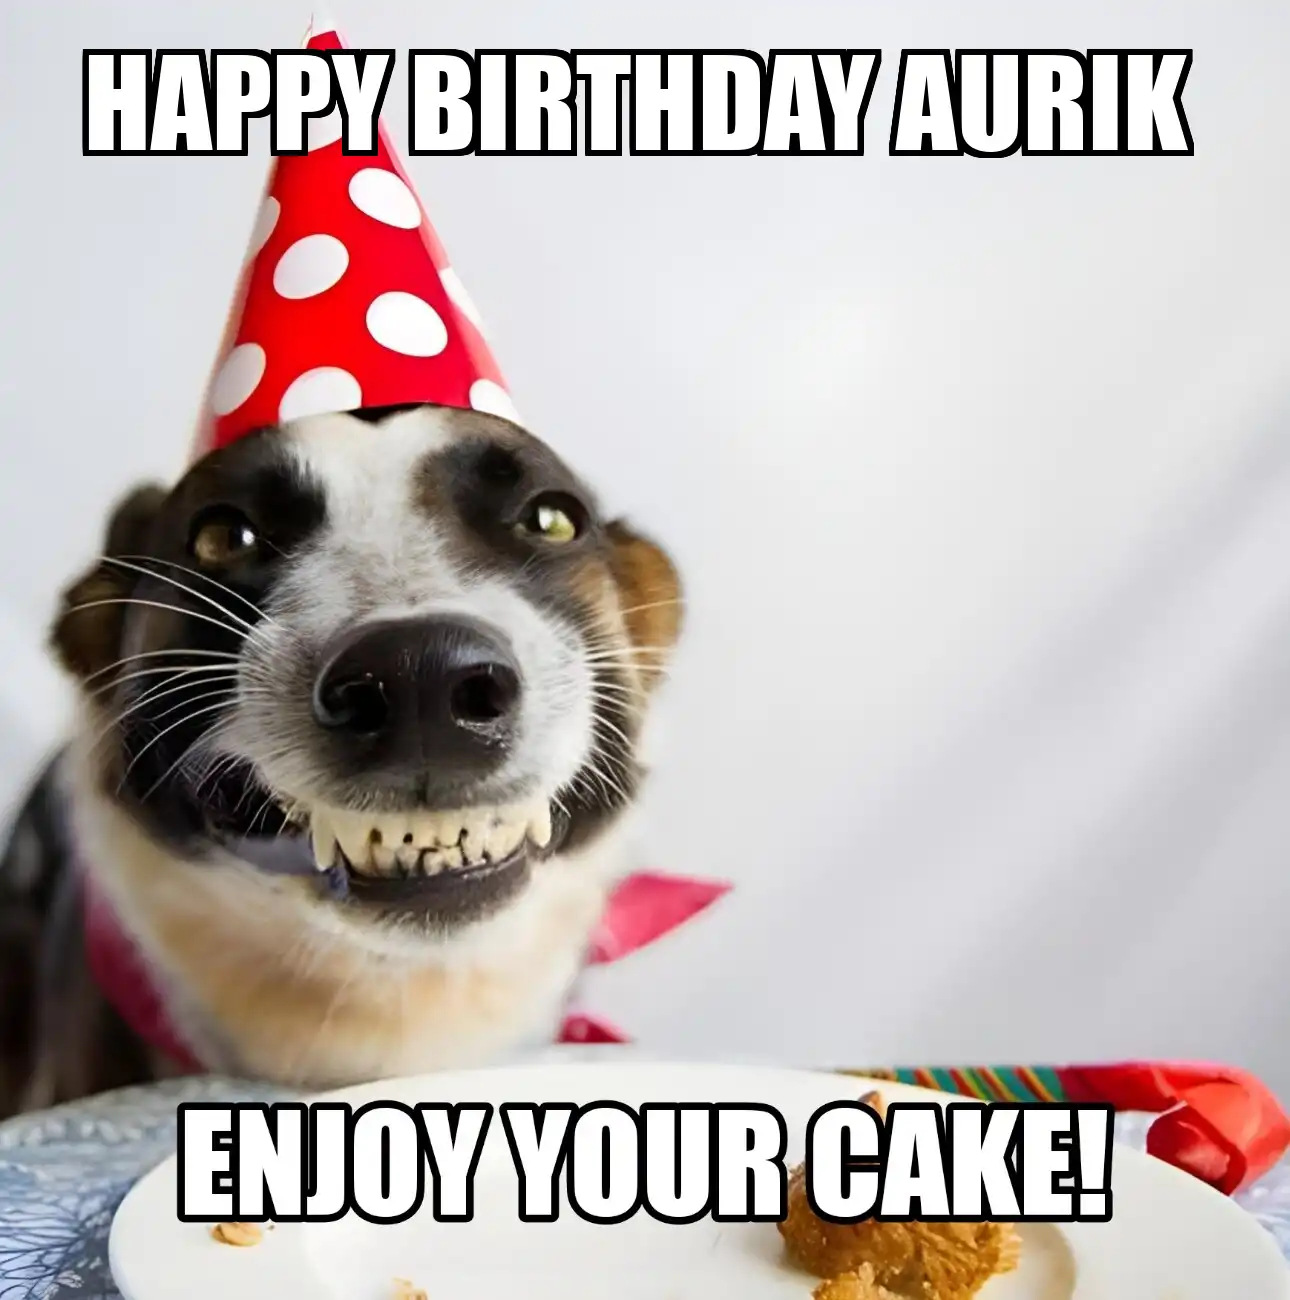 Happy Birthday Aurik Enjoy Your Cake Dog Meme